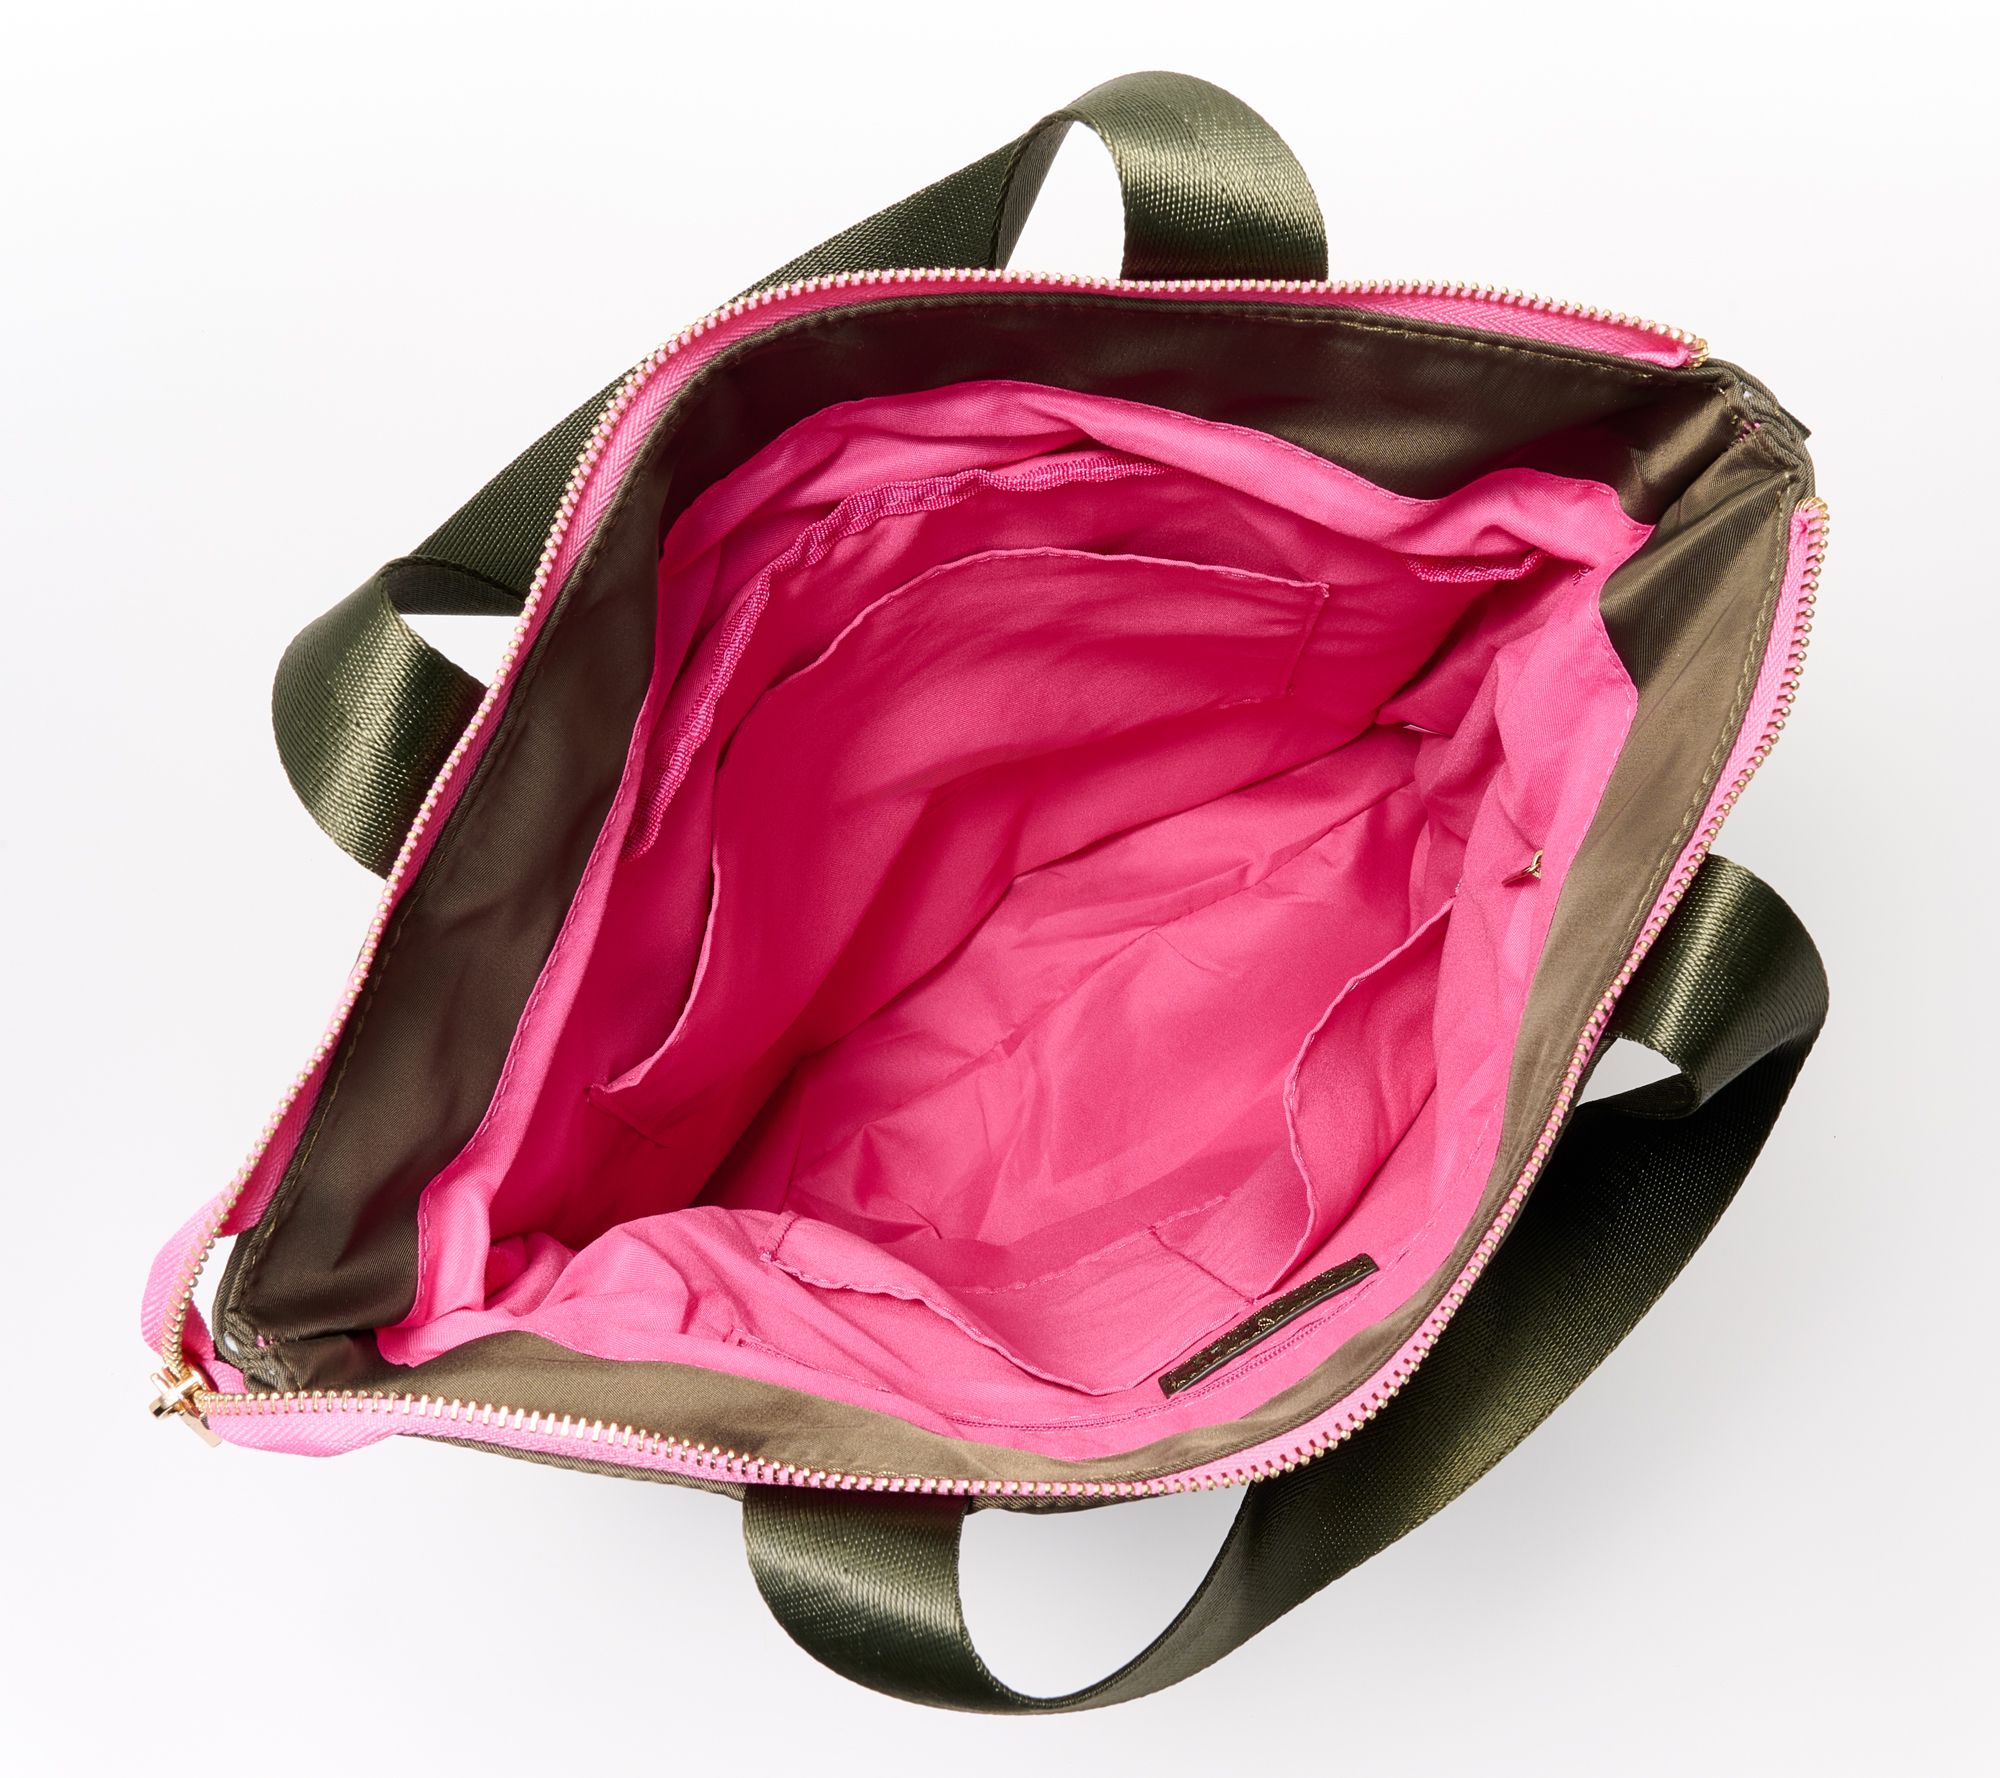 Burst Print Foldable Tote Bag - Black/red : Target